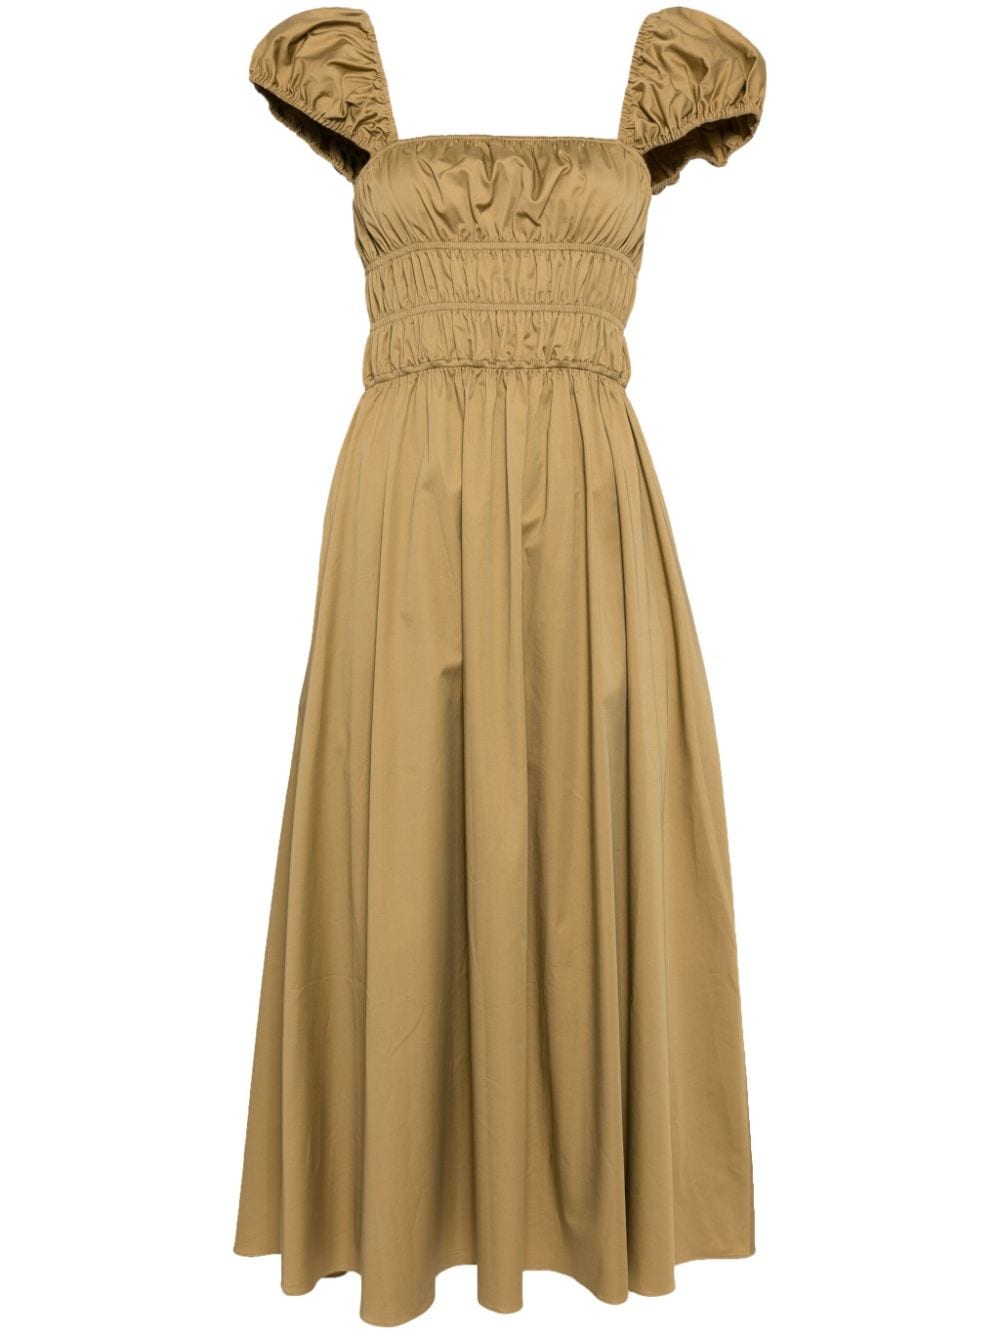 Cynthia Rowley Midi Length Cotton Dress - Brown